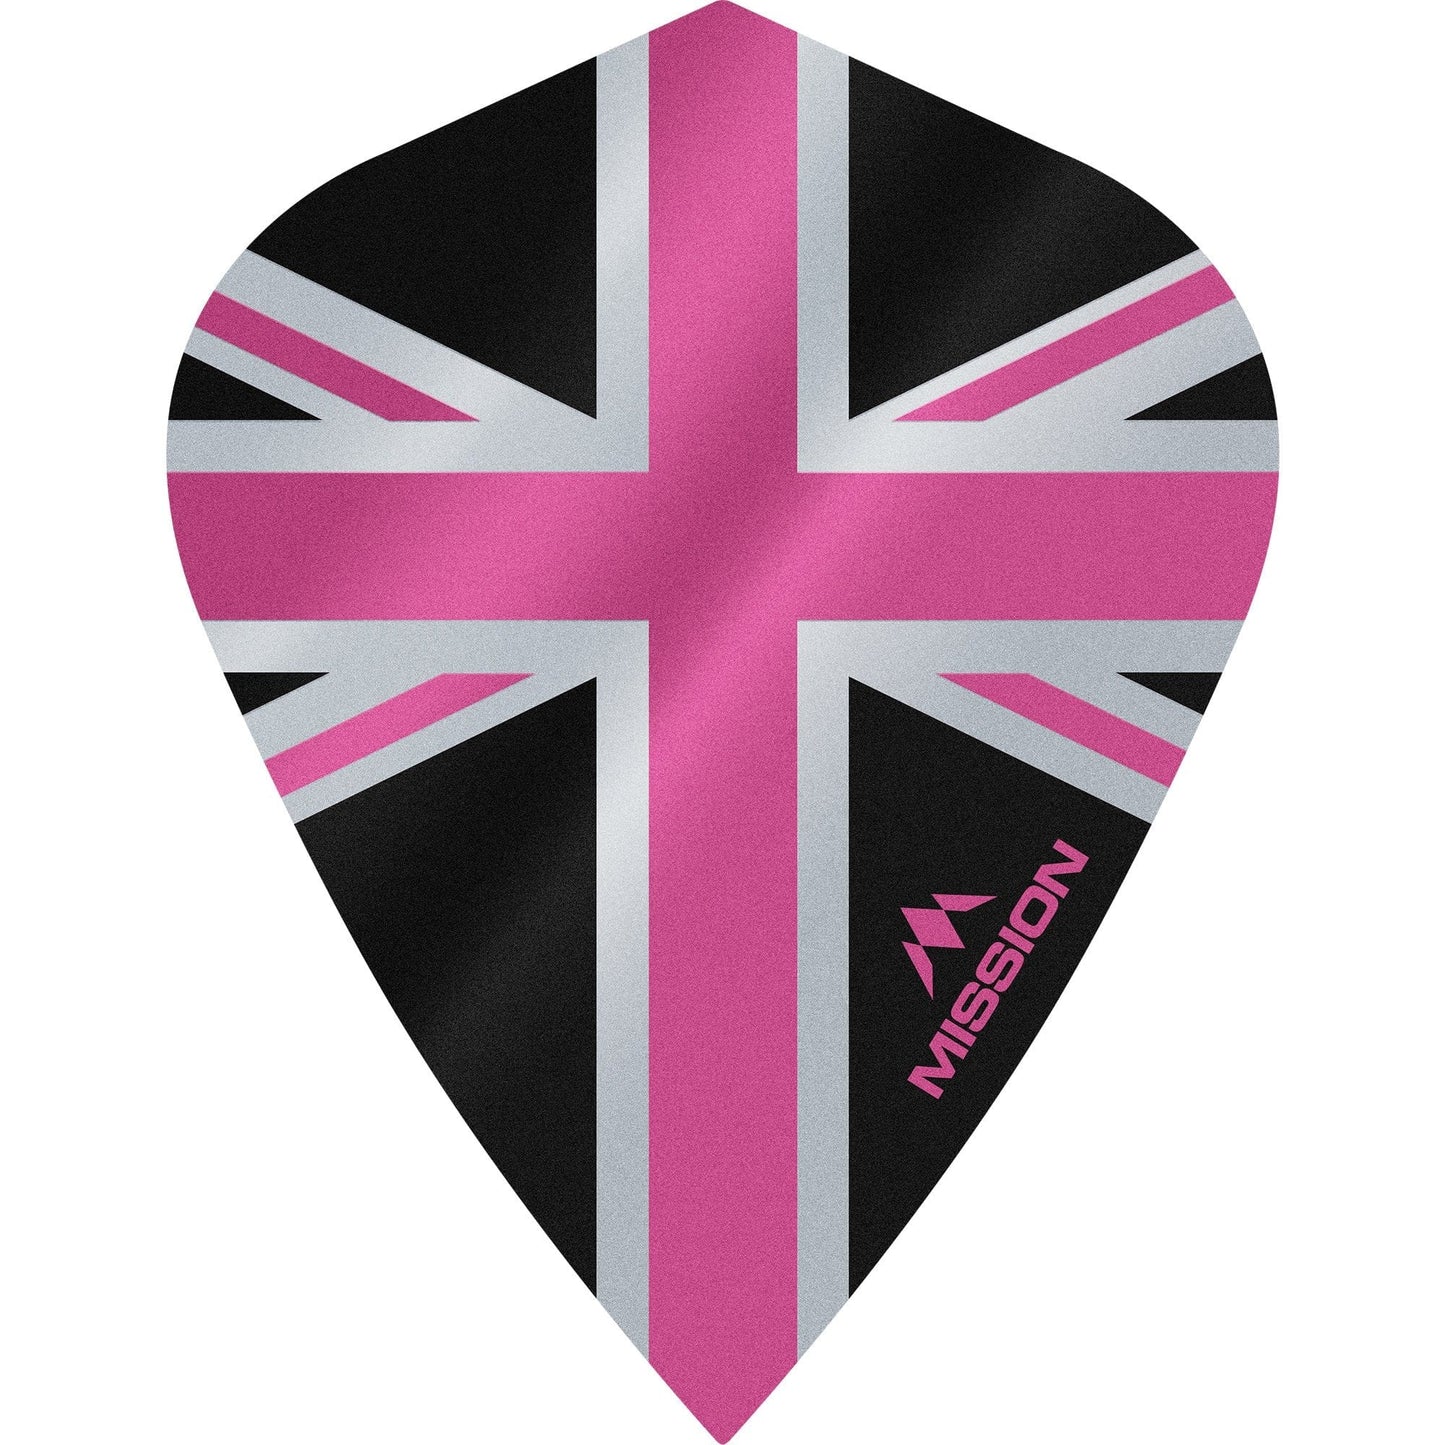 Mission Alliance Union Jack Dart Flights - Kite - Black Black Pink